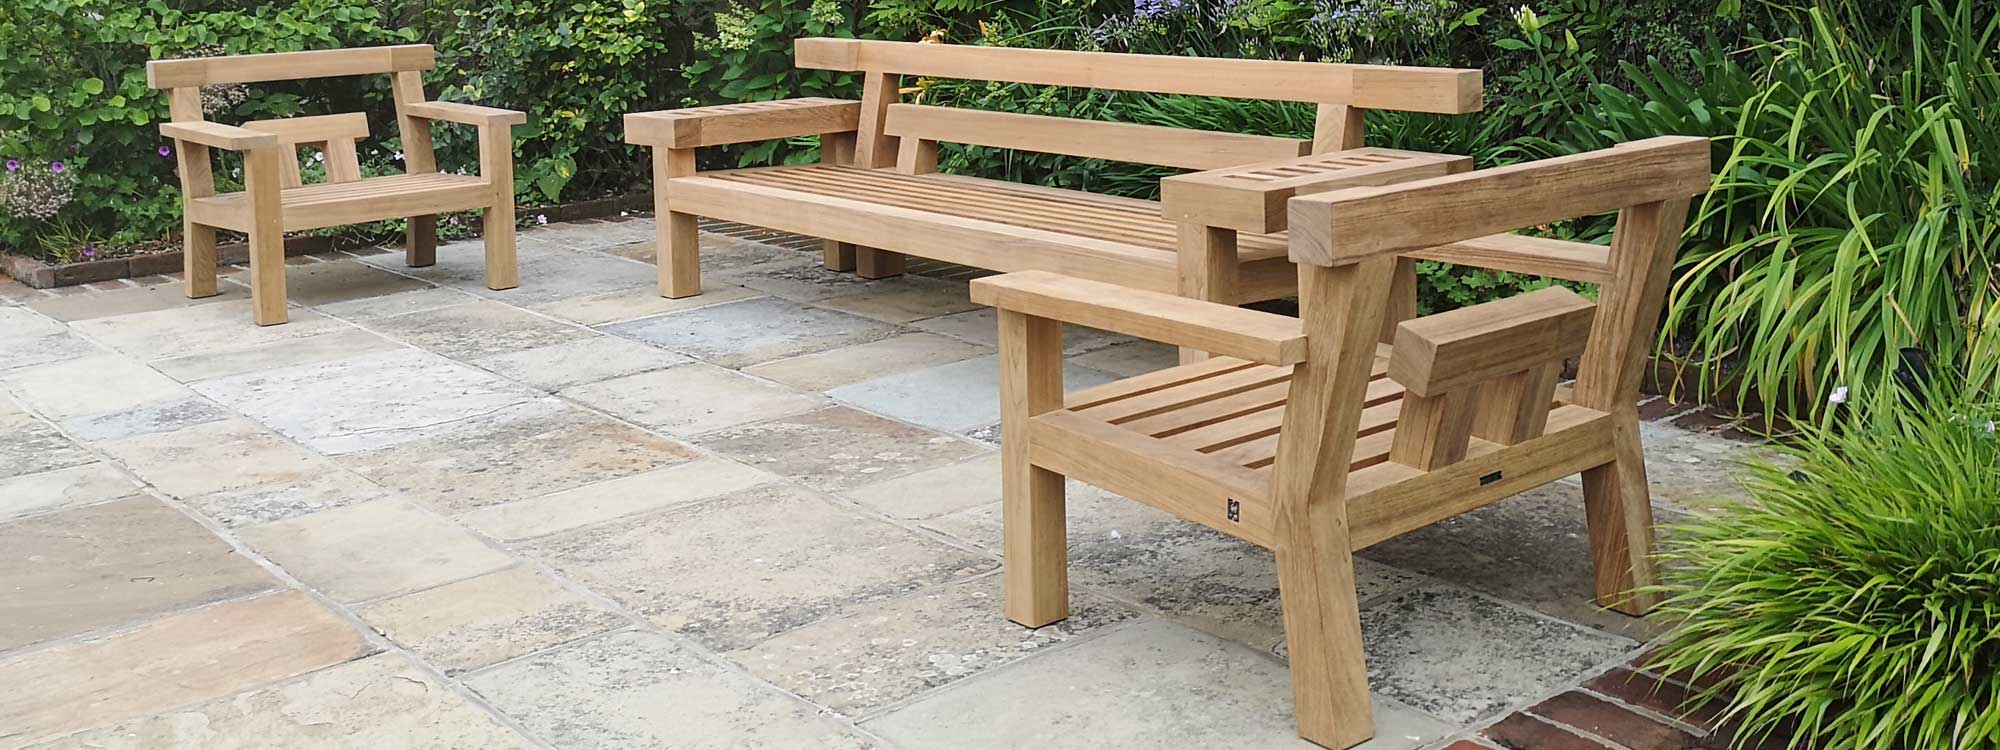 Nara modern teak garden bench includes an outdoor lounge bench, individual lounge bench & bench seat by Royal Botania high quality teak furniture